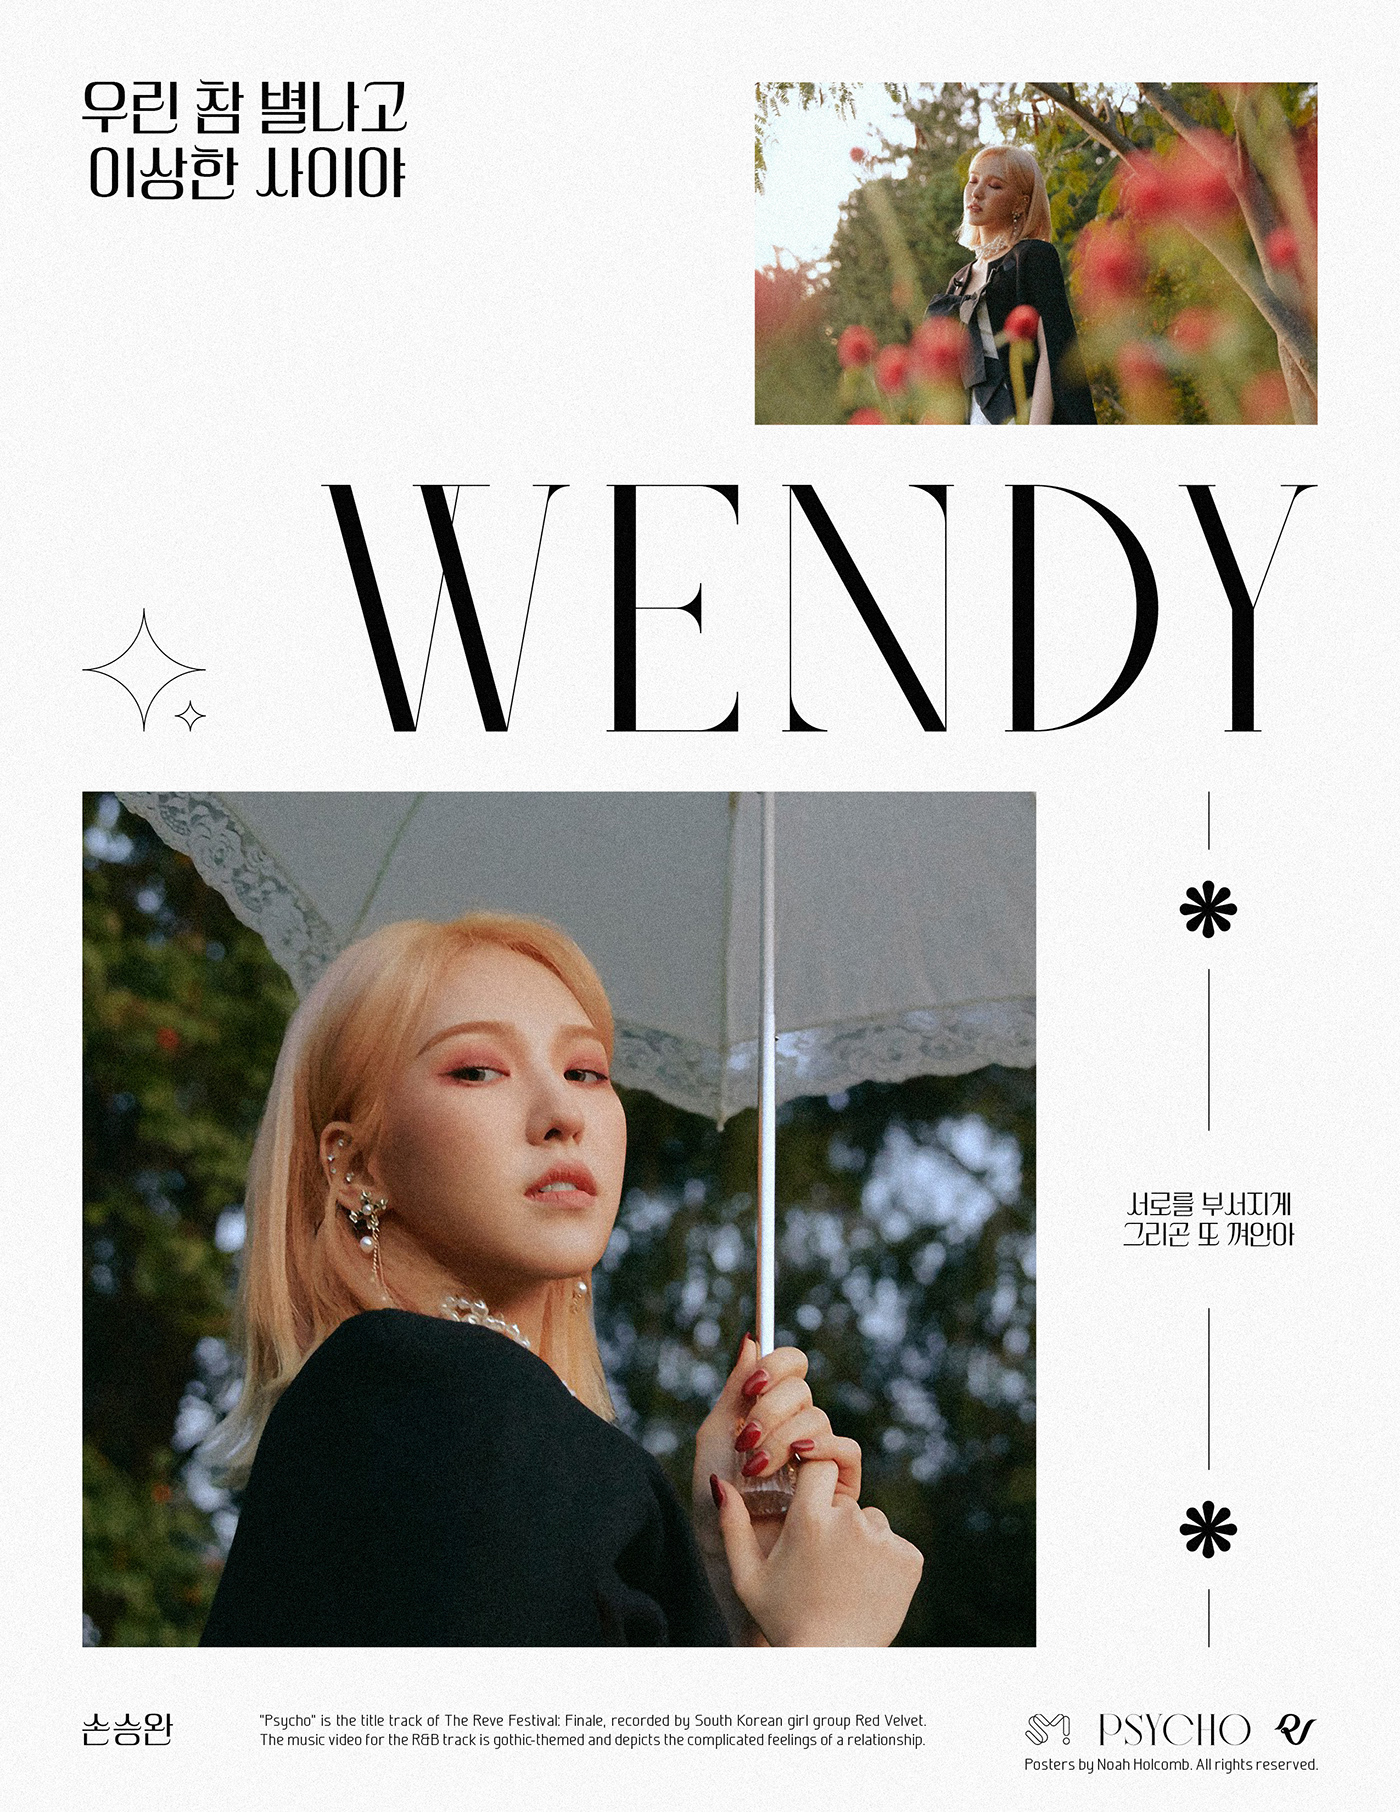 Red Velvet "Psycho" Posters - Wendy